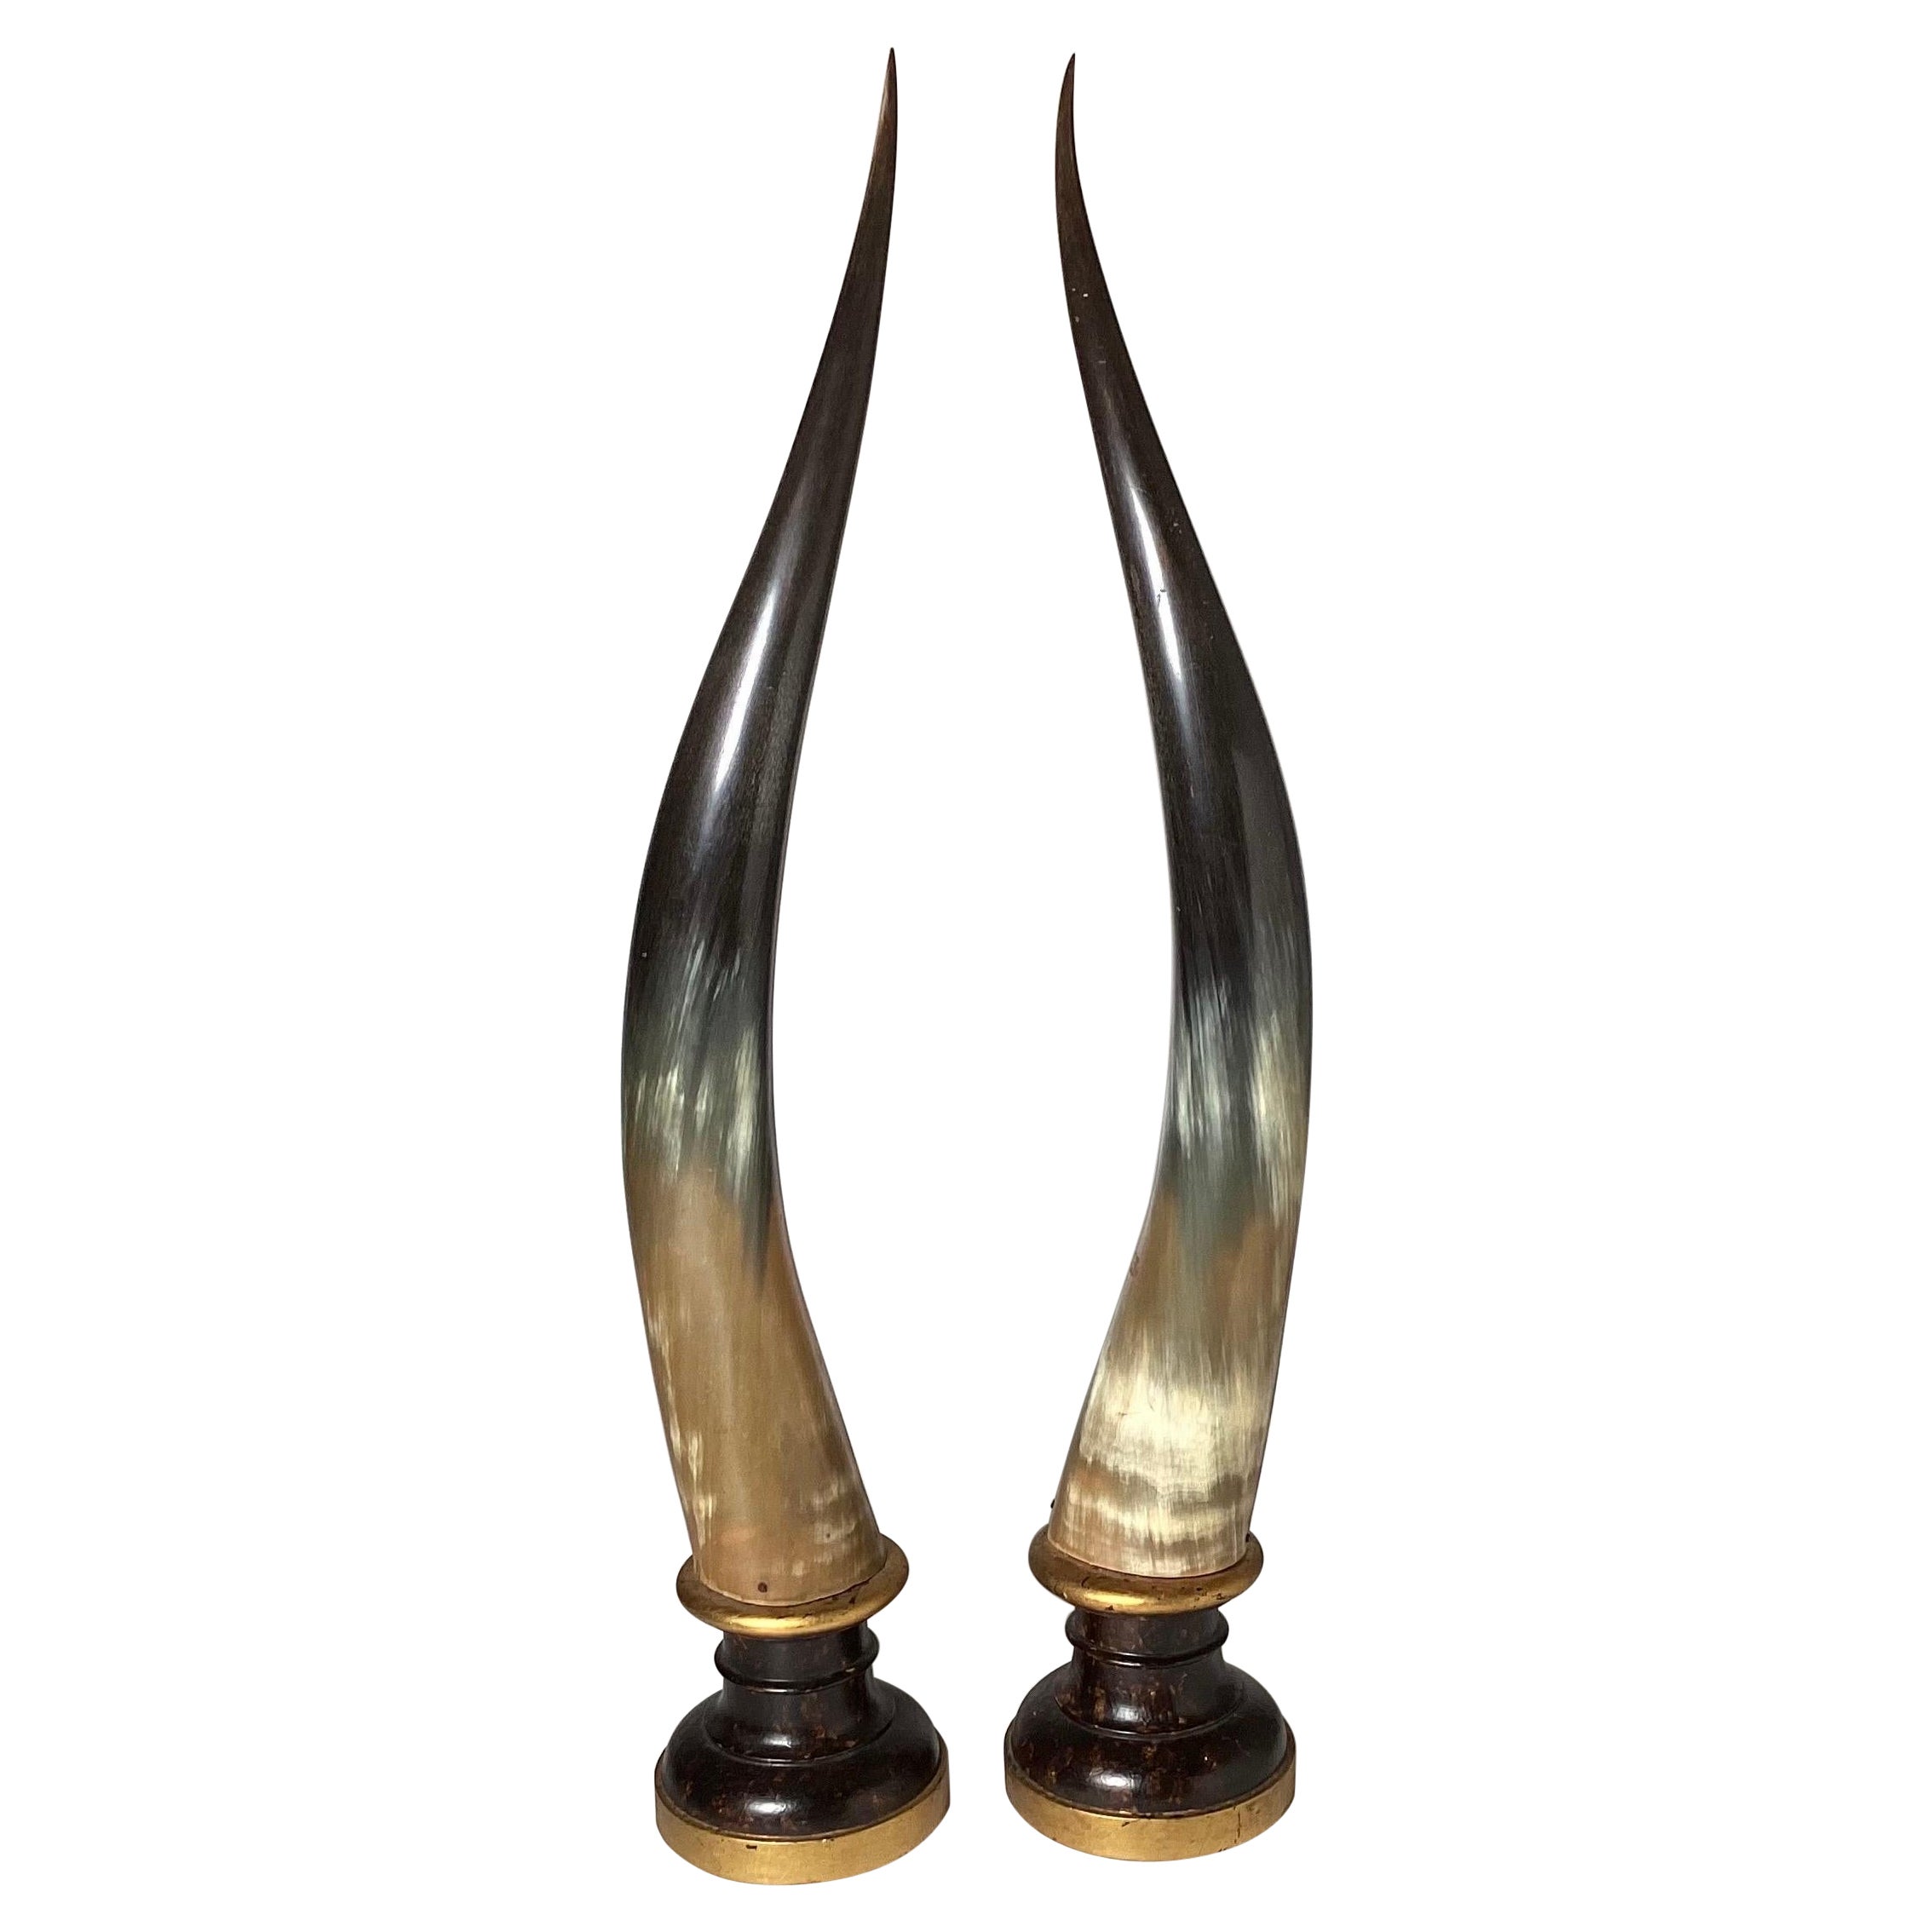 Elegant Pair of Steer Horns on Wood Plinth Bases, Italy Mid-20th Century